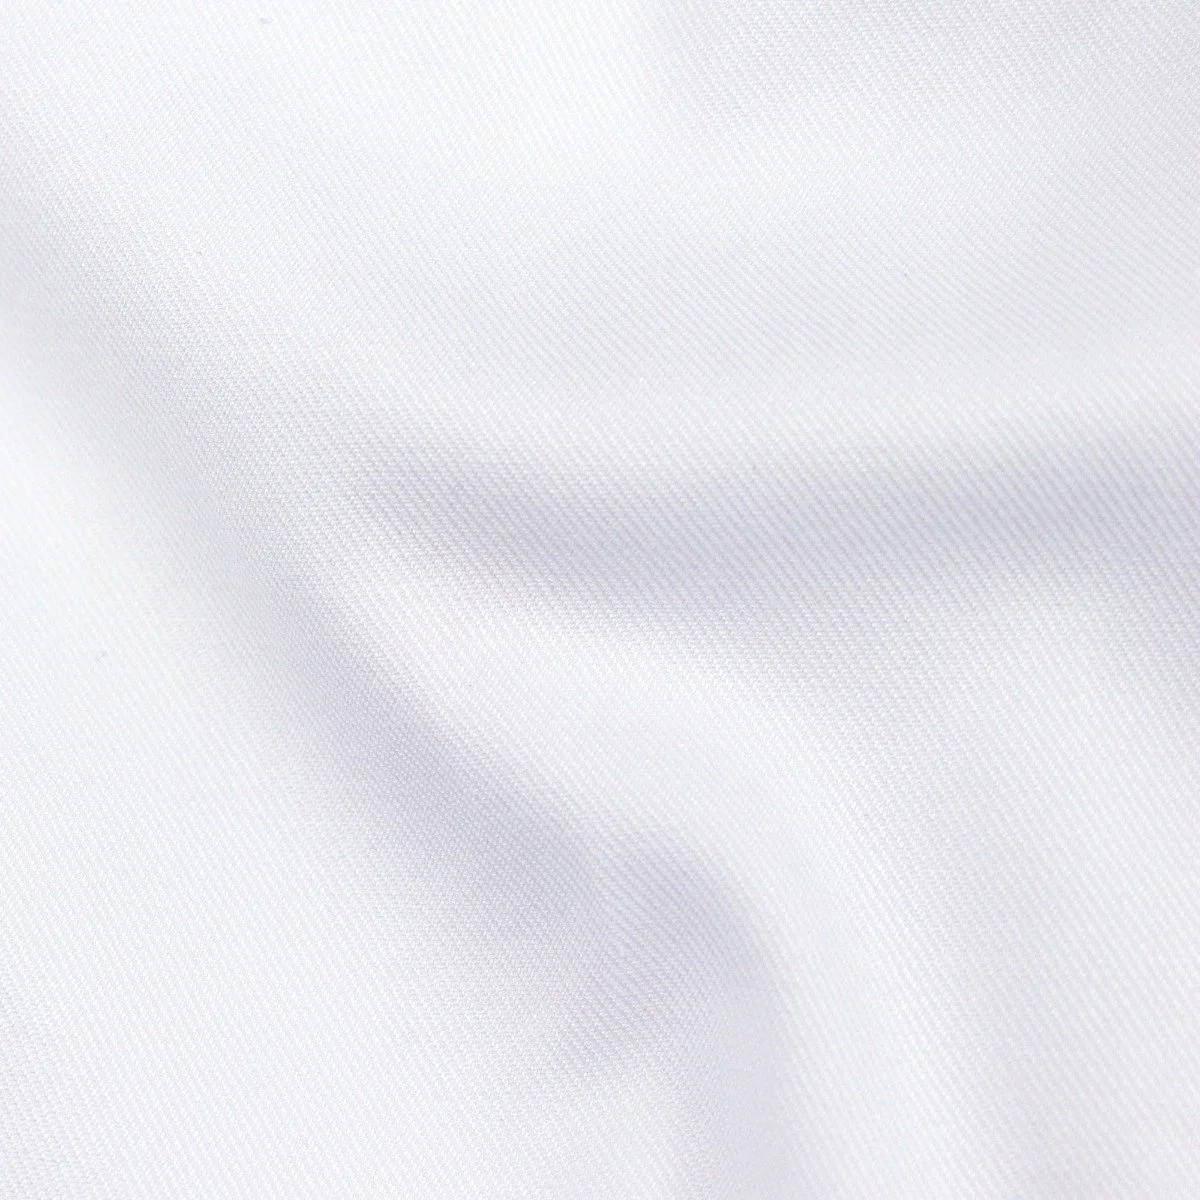 Cordone 1956 white slim fit twill men's dress shirt